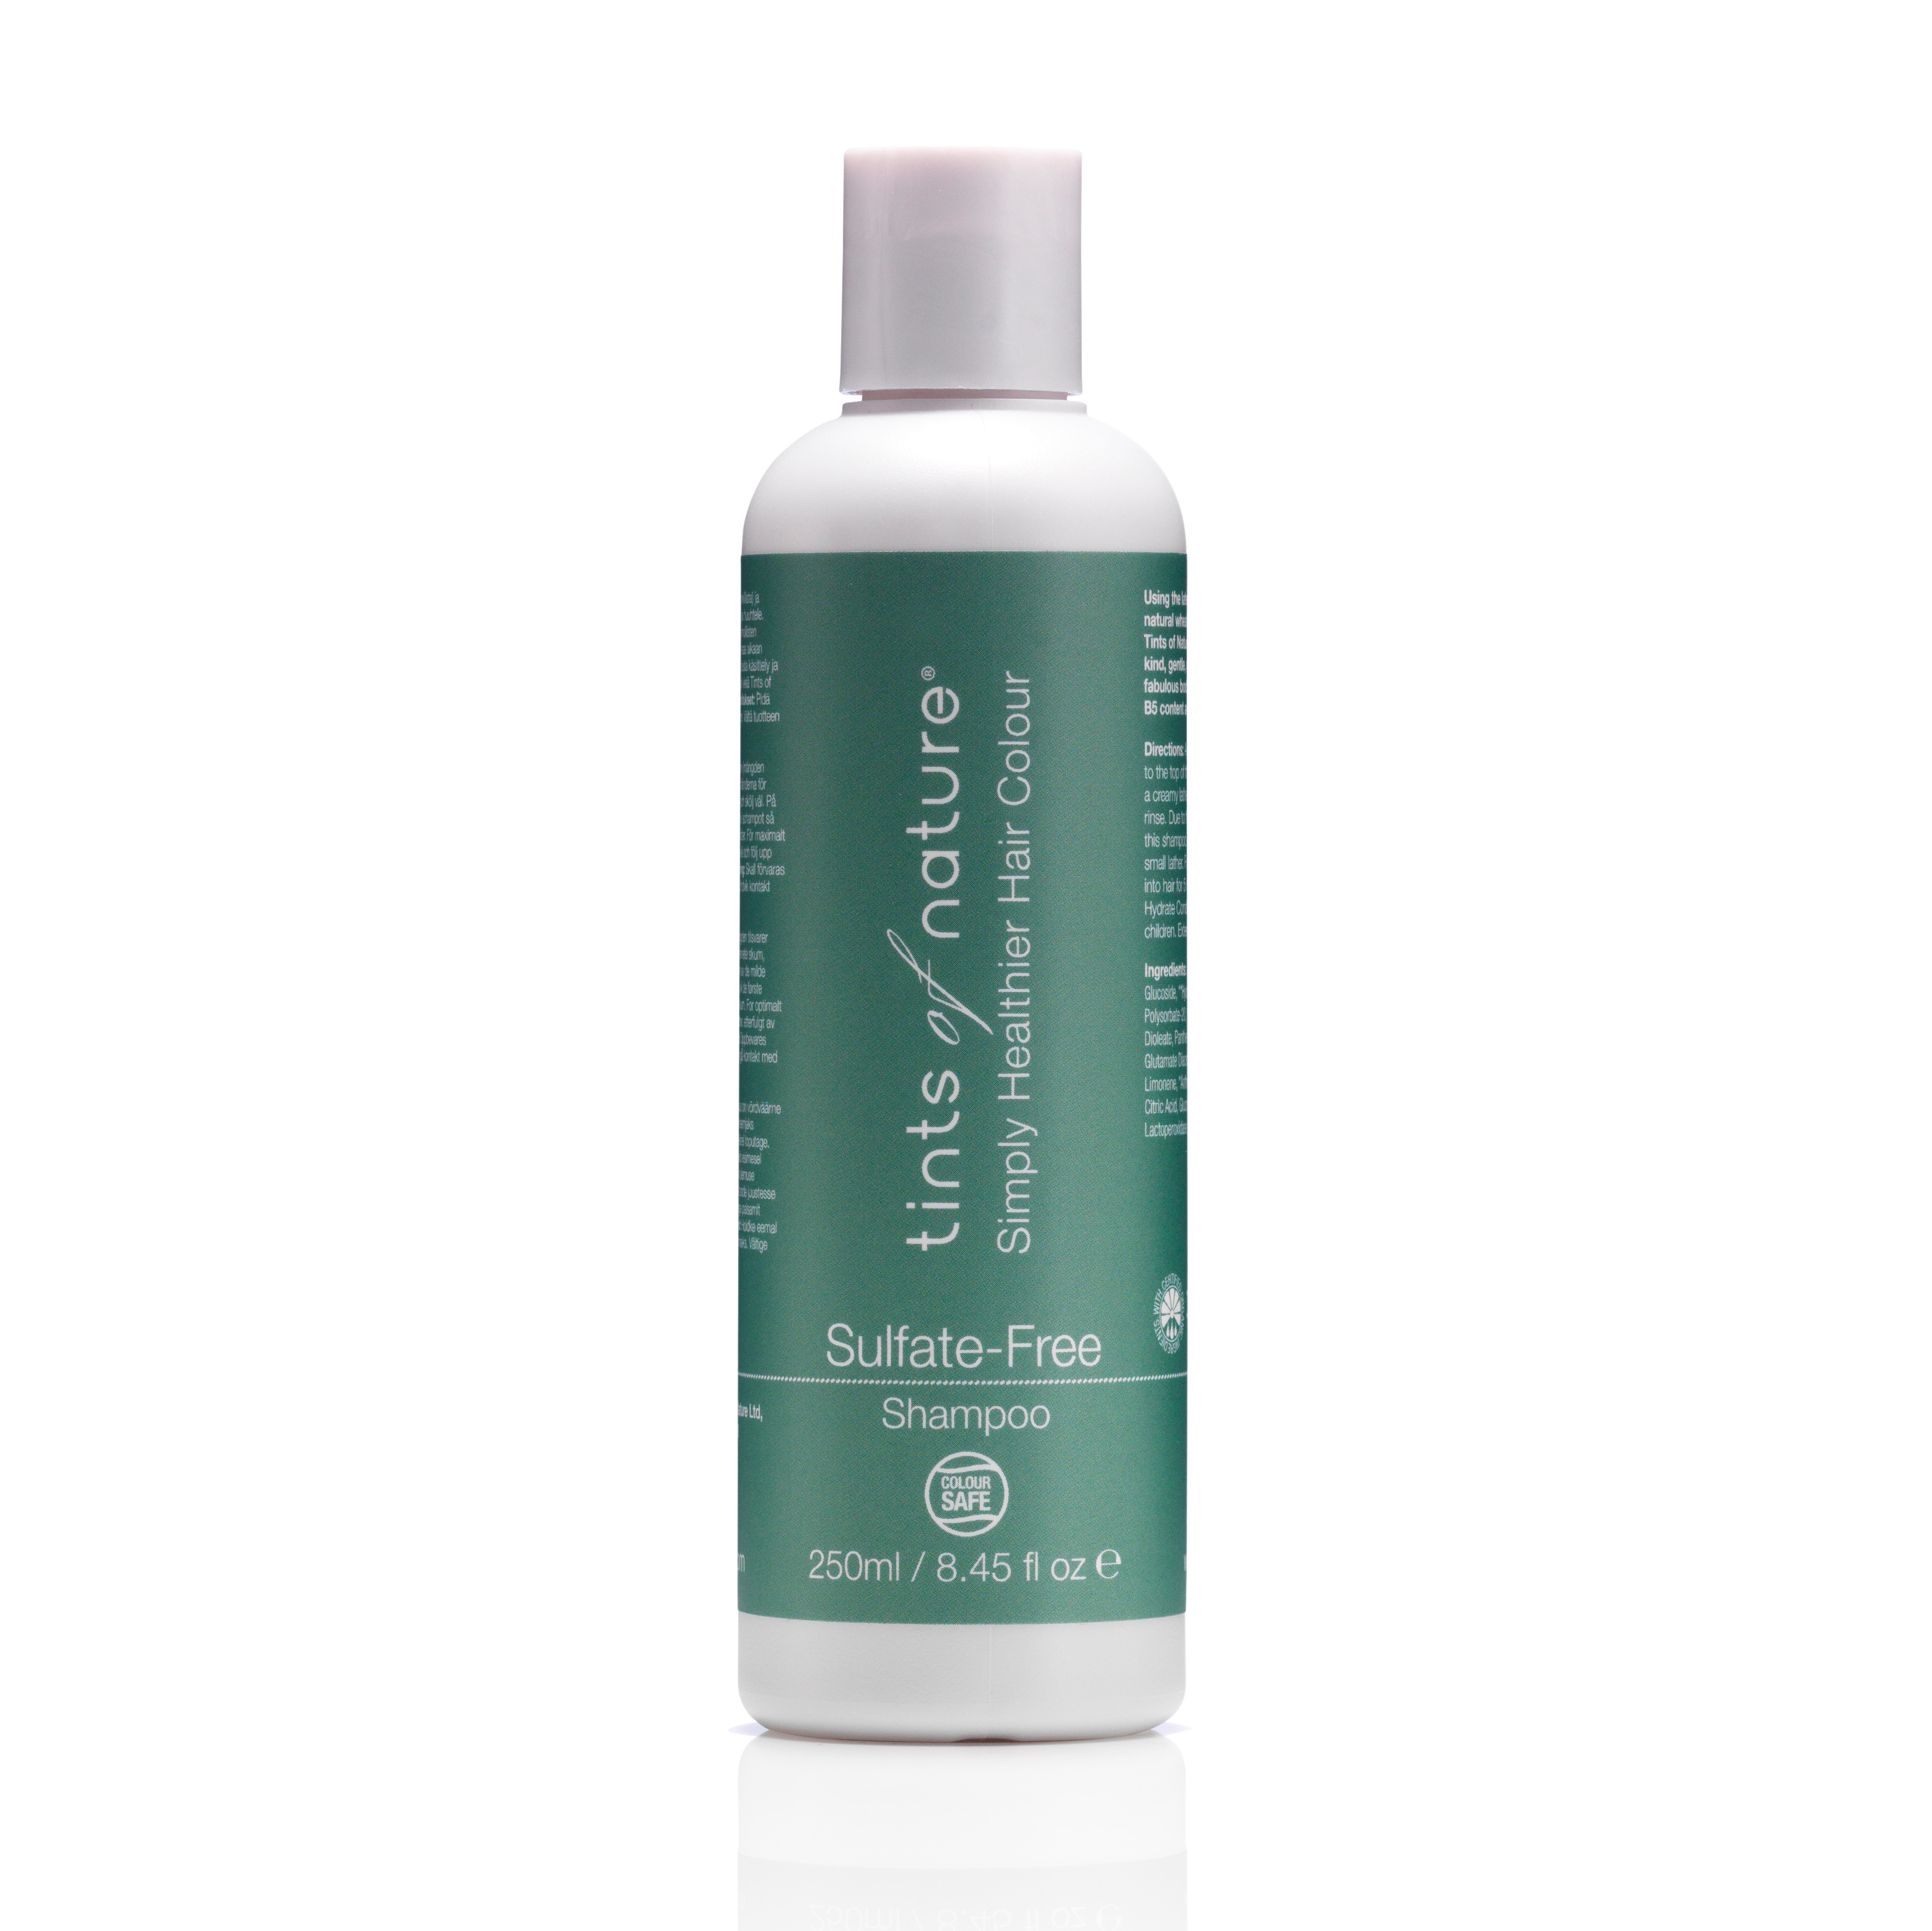 Sulfate-Free Shampoo 250ml